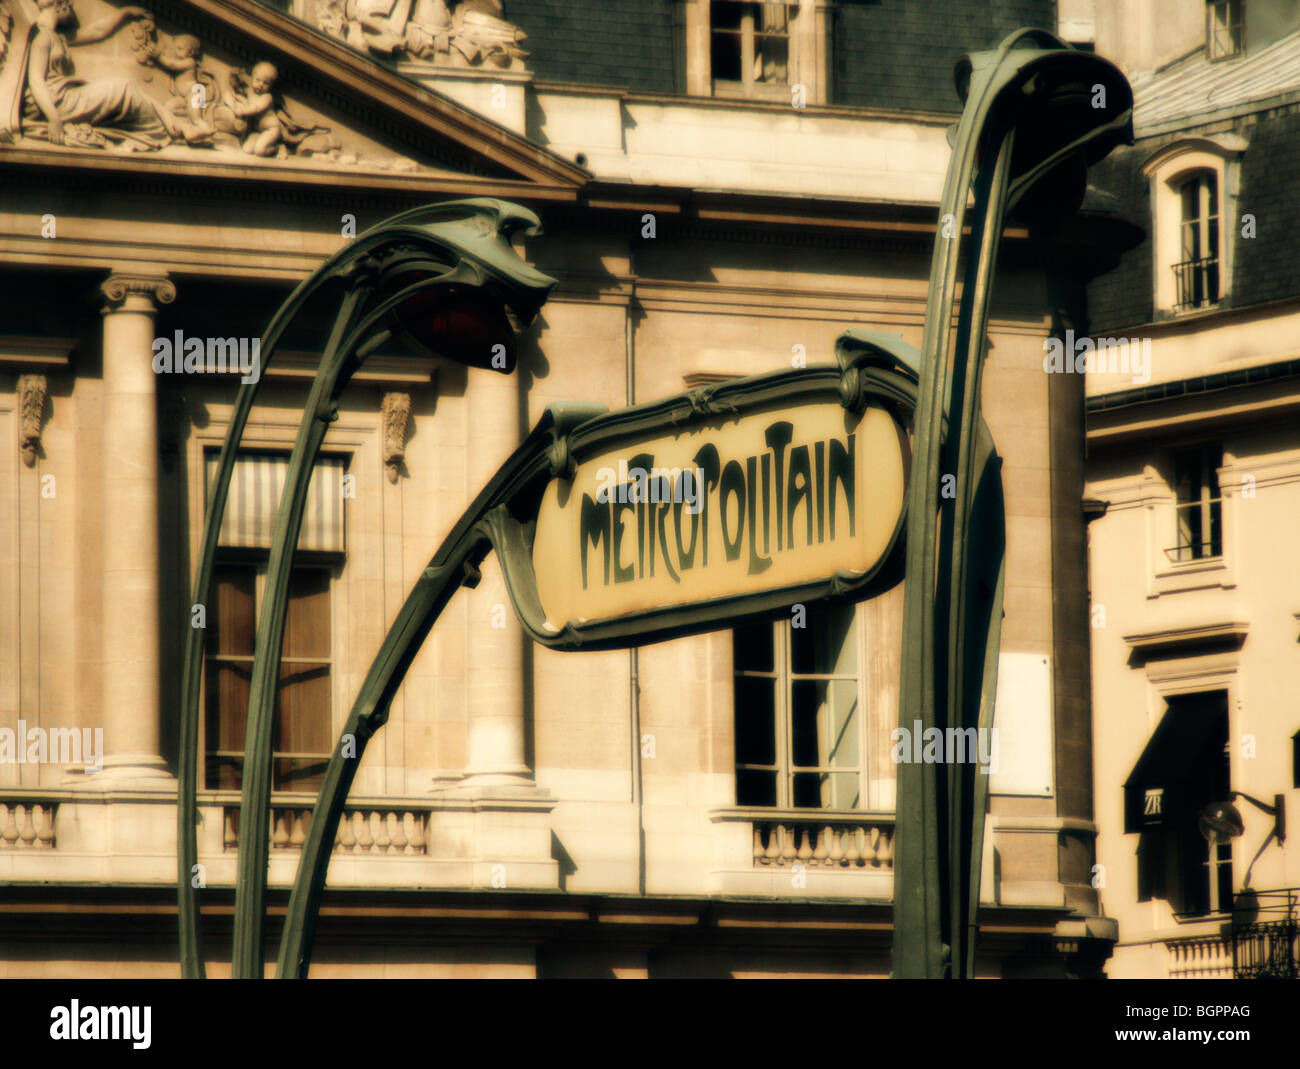 Classical Art Nouveau Metro sign by Hector Guimard (c. 1900). Metro Palais Royal. Paris. France Stock Photo